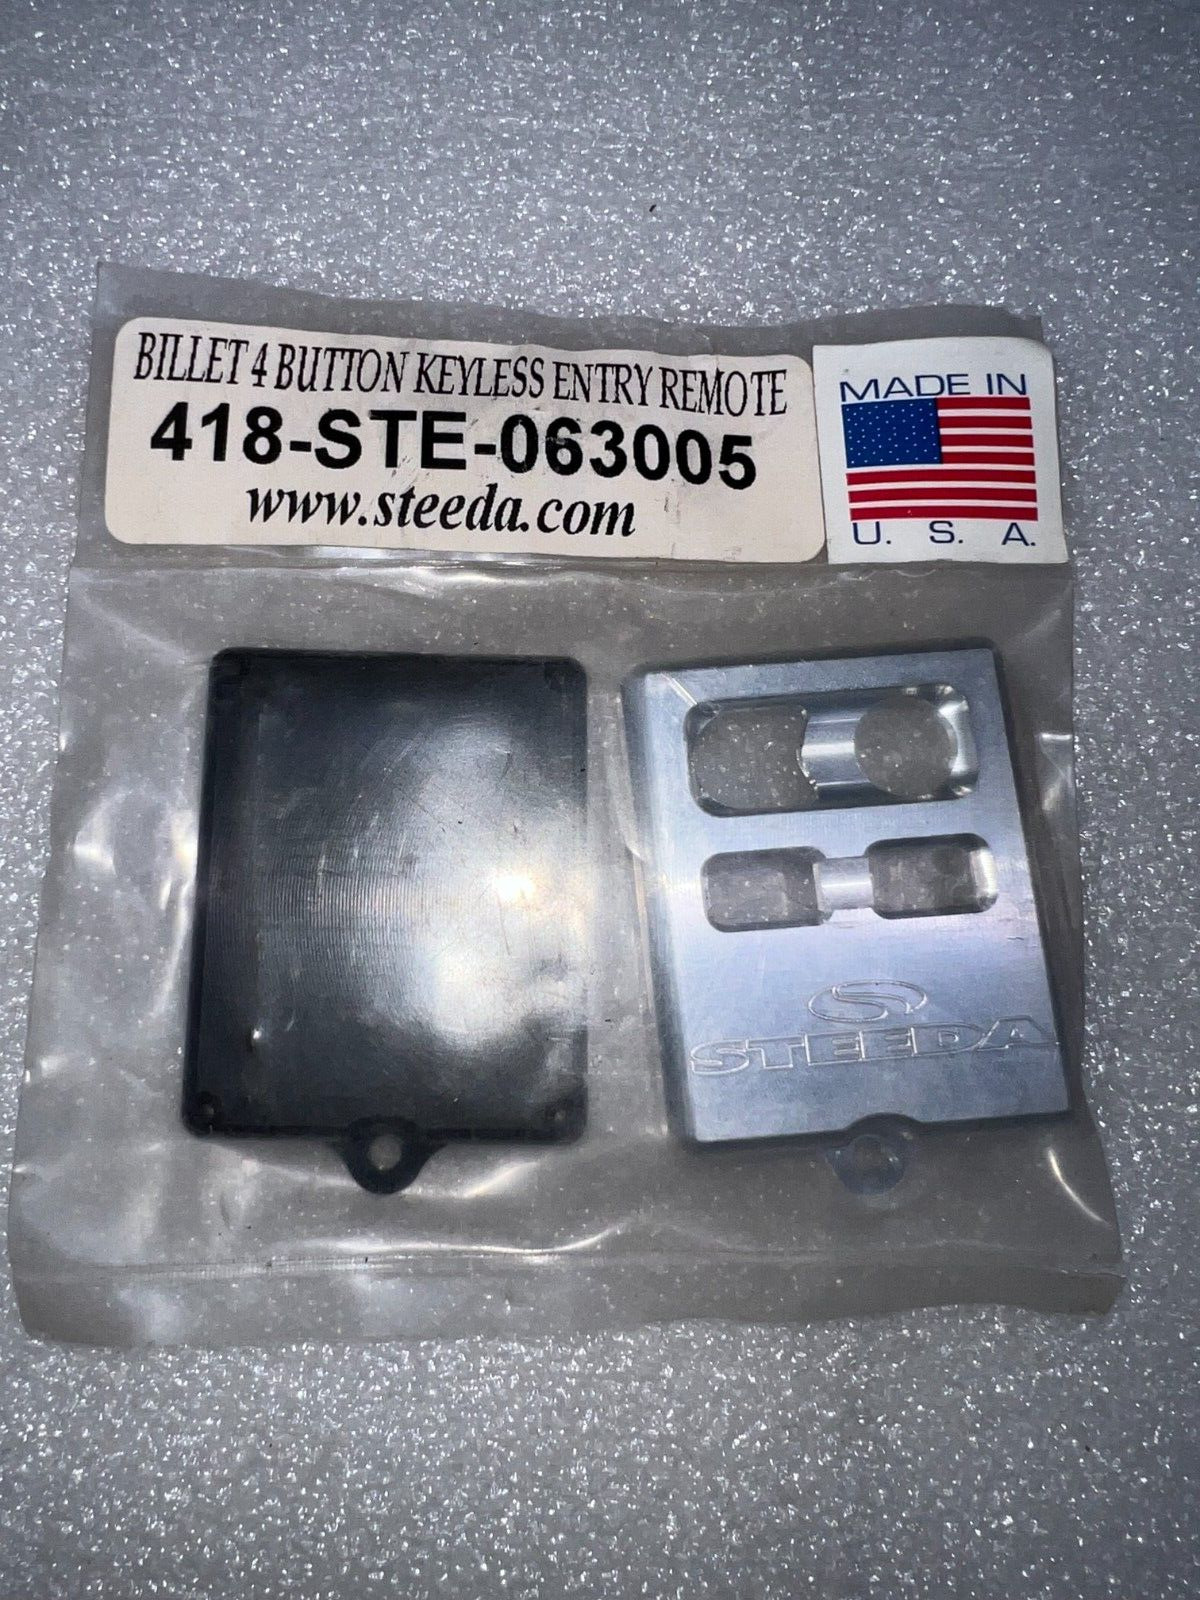 Steeda Mustang Billet 4 Button Keyless Entry Remote PN: 558-418-STE-063005